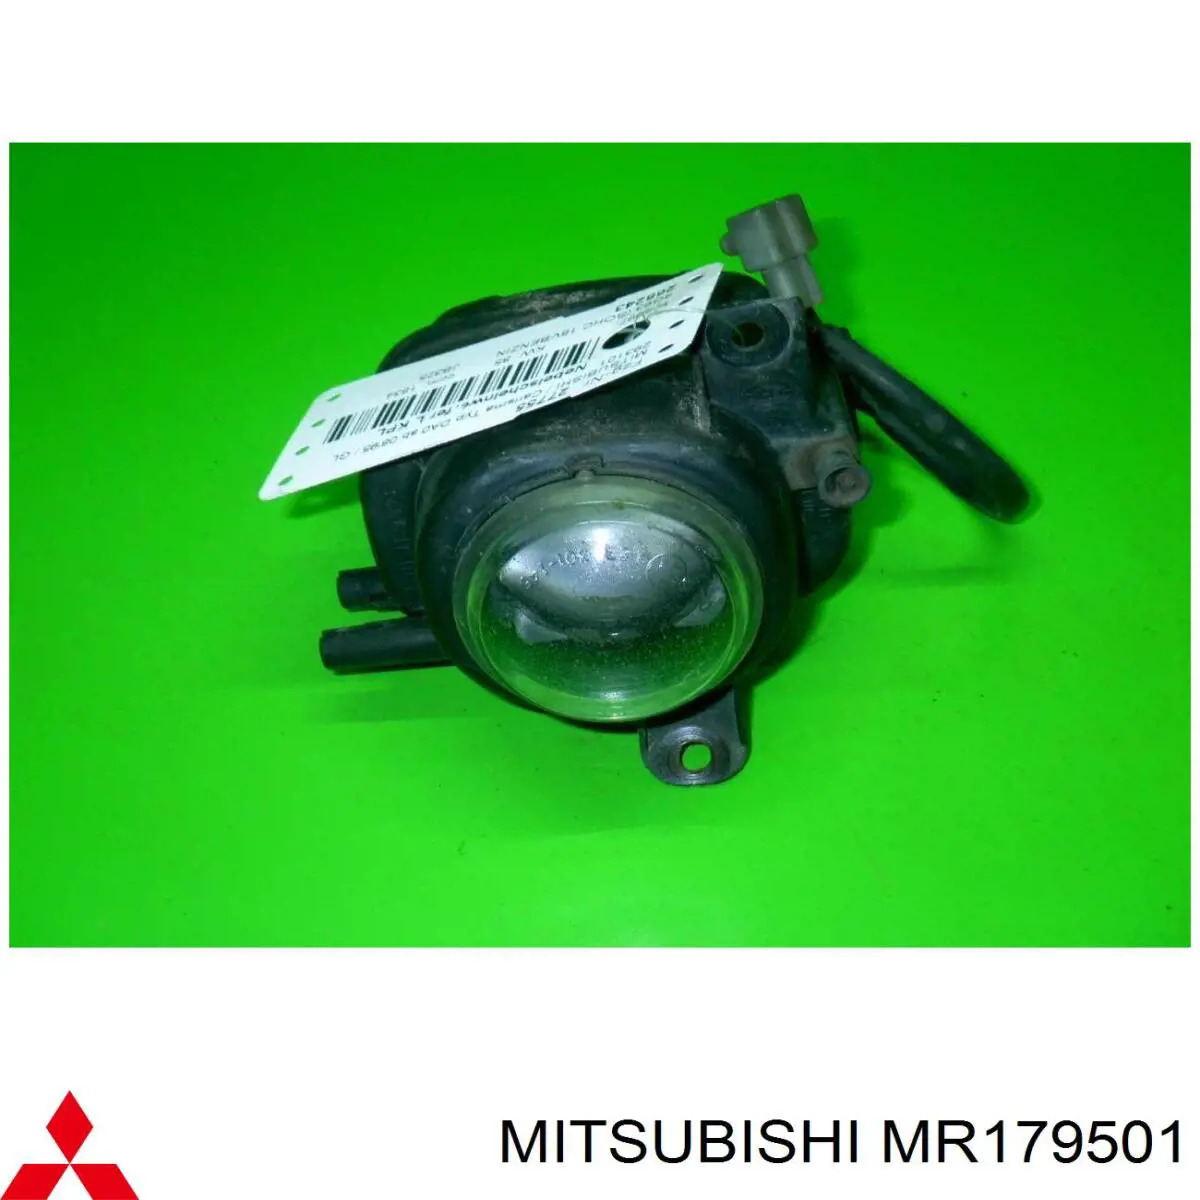 MR179501 Mitsubishi luzes de nevoeiro esquerdas